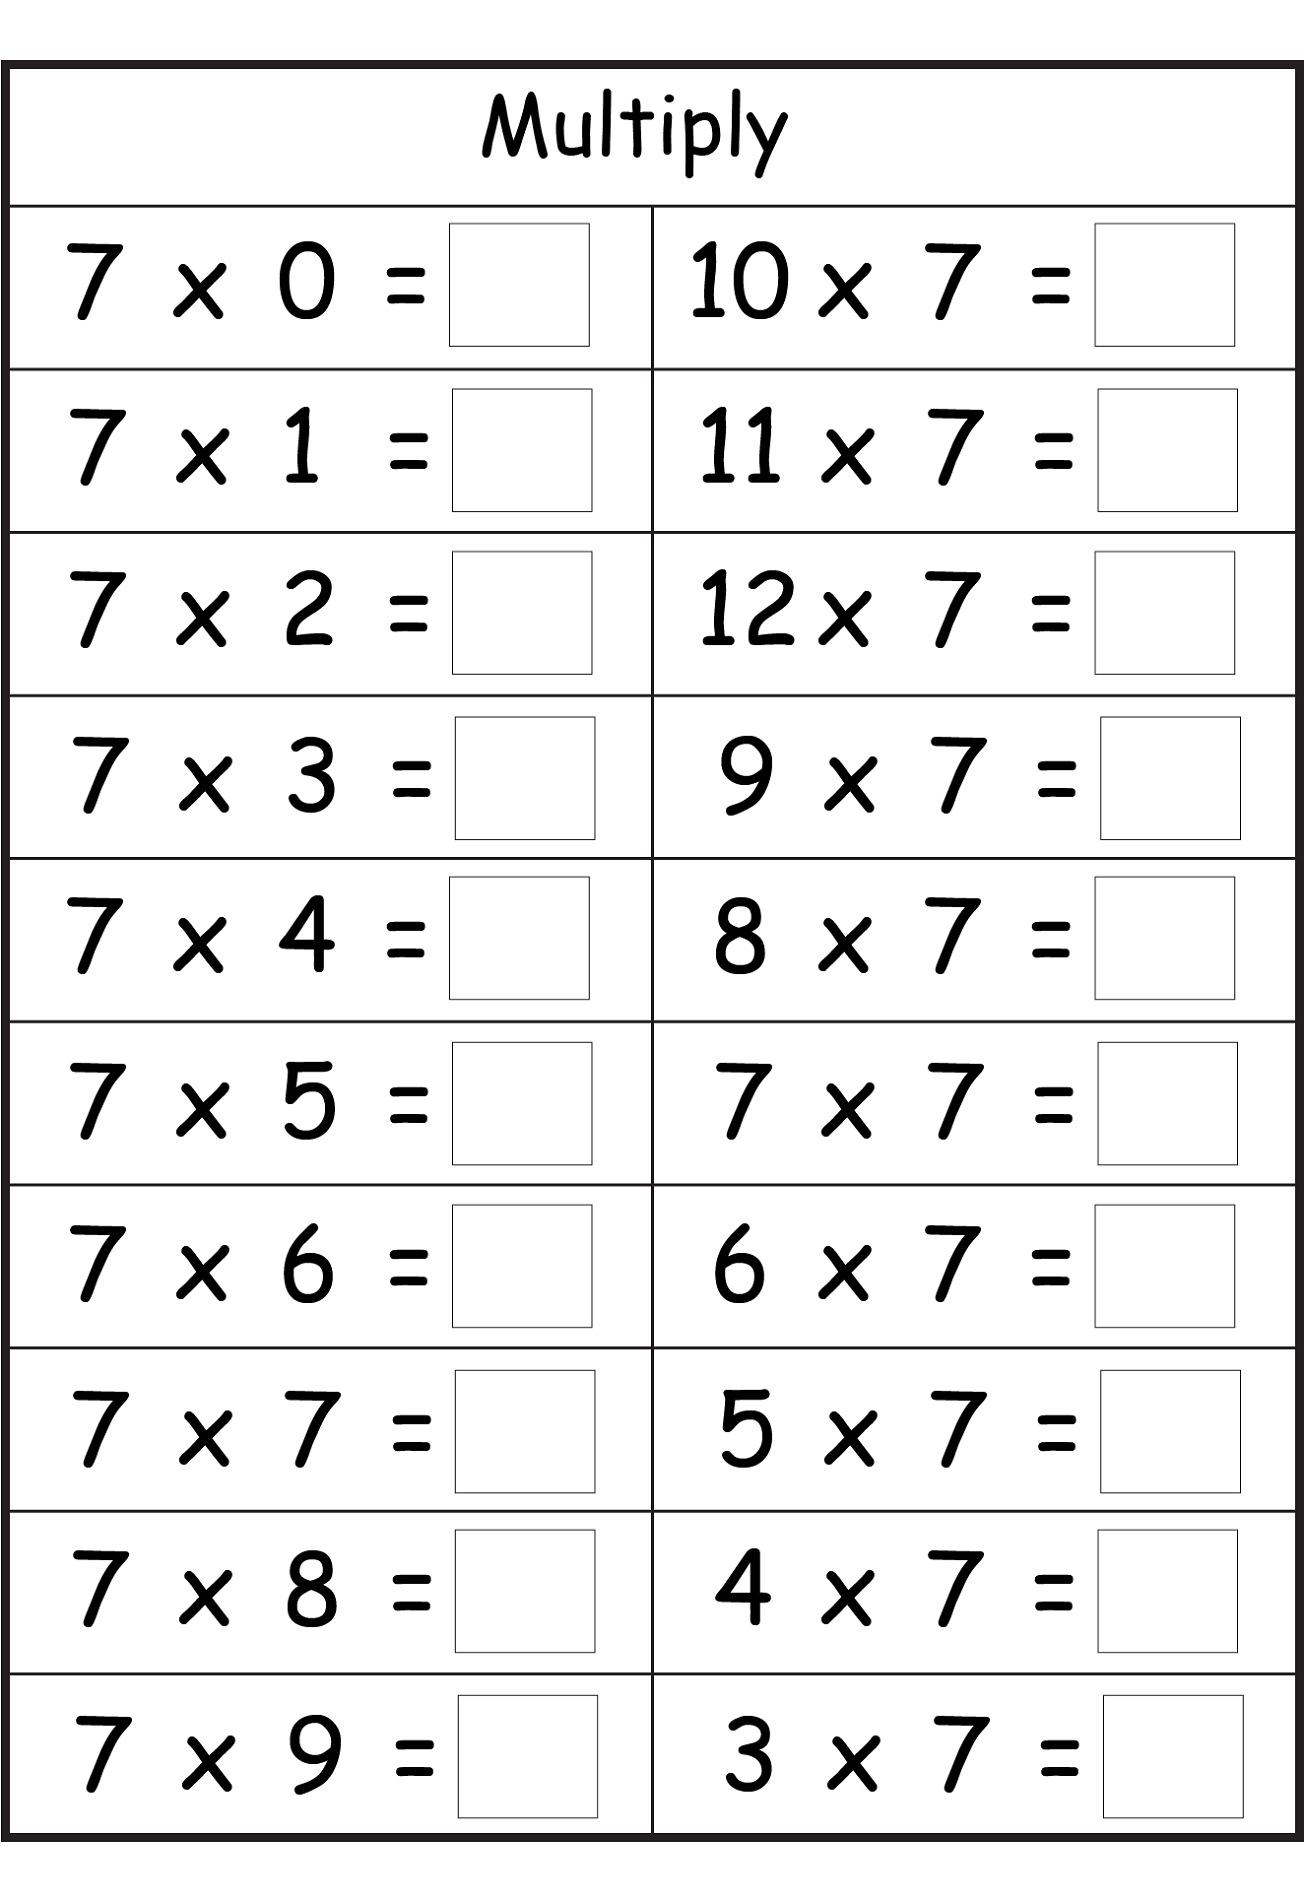 printable-multiplication-worksheets-7-times-tables-printable